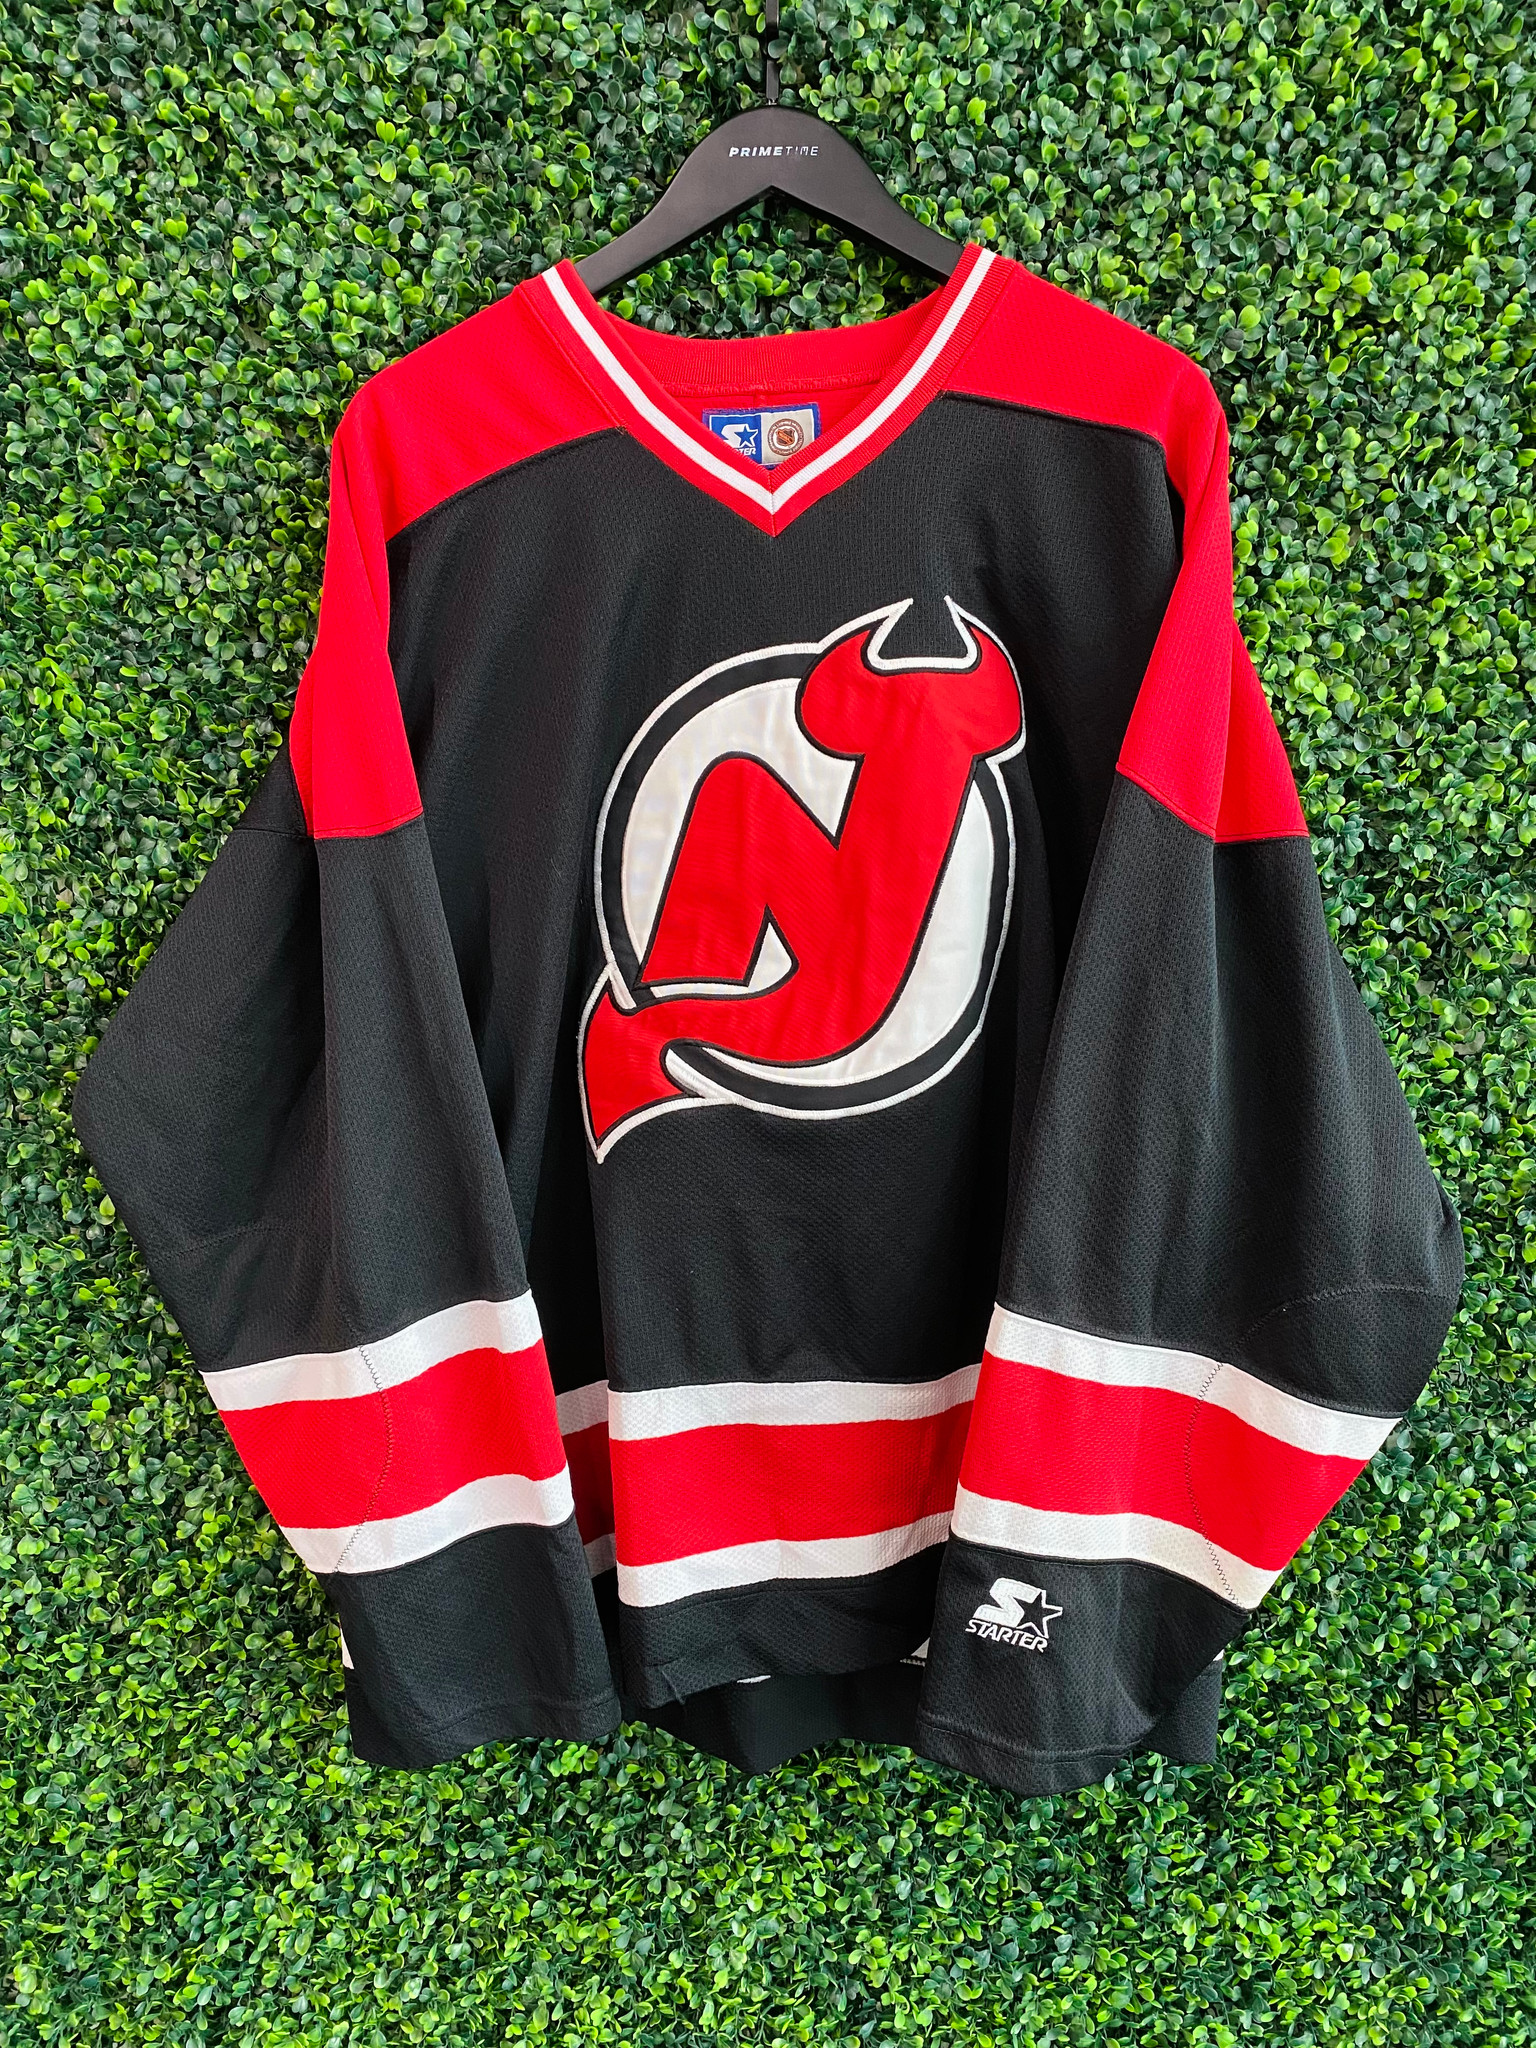 XL mens New Jersey Devils jersey red / black retro Starter #Jersey